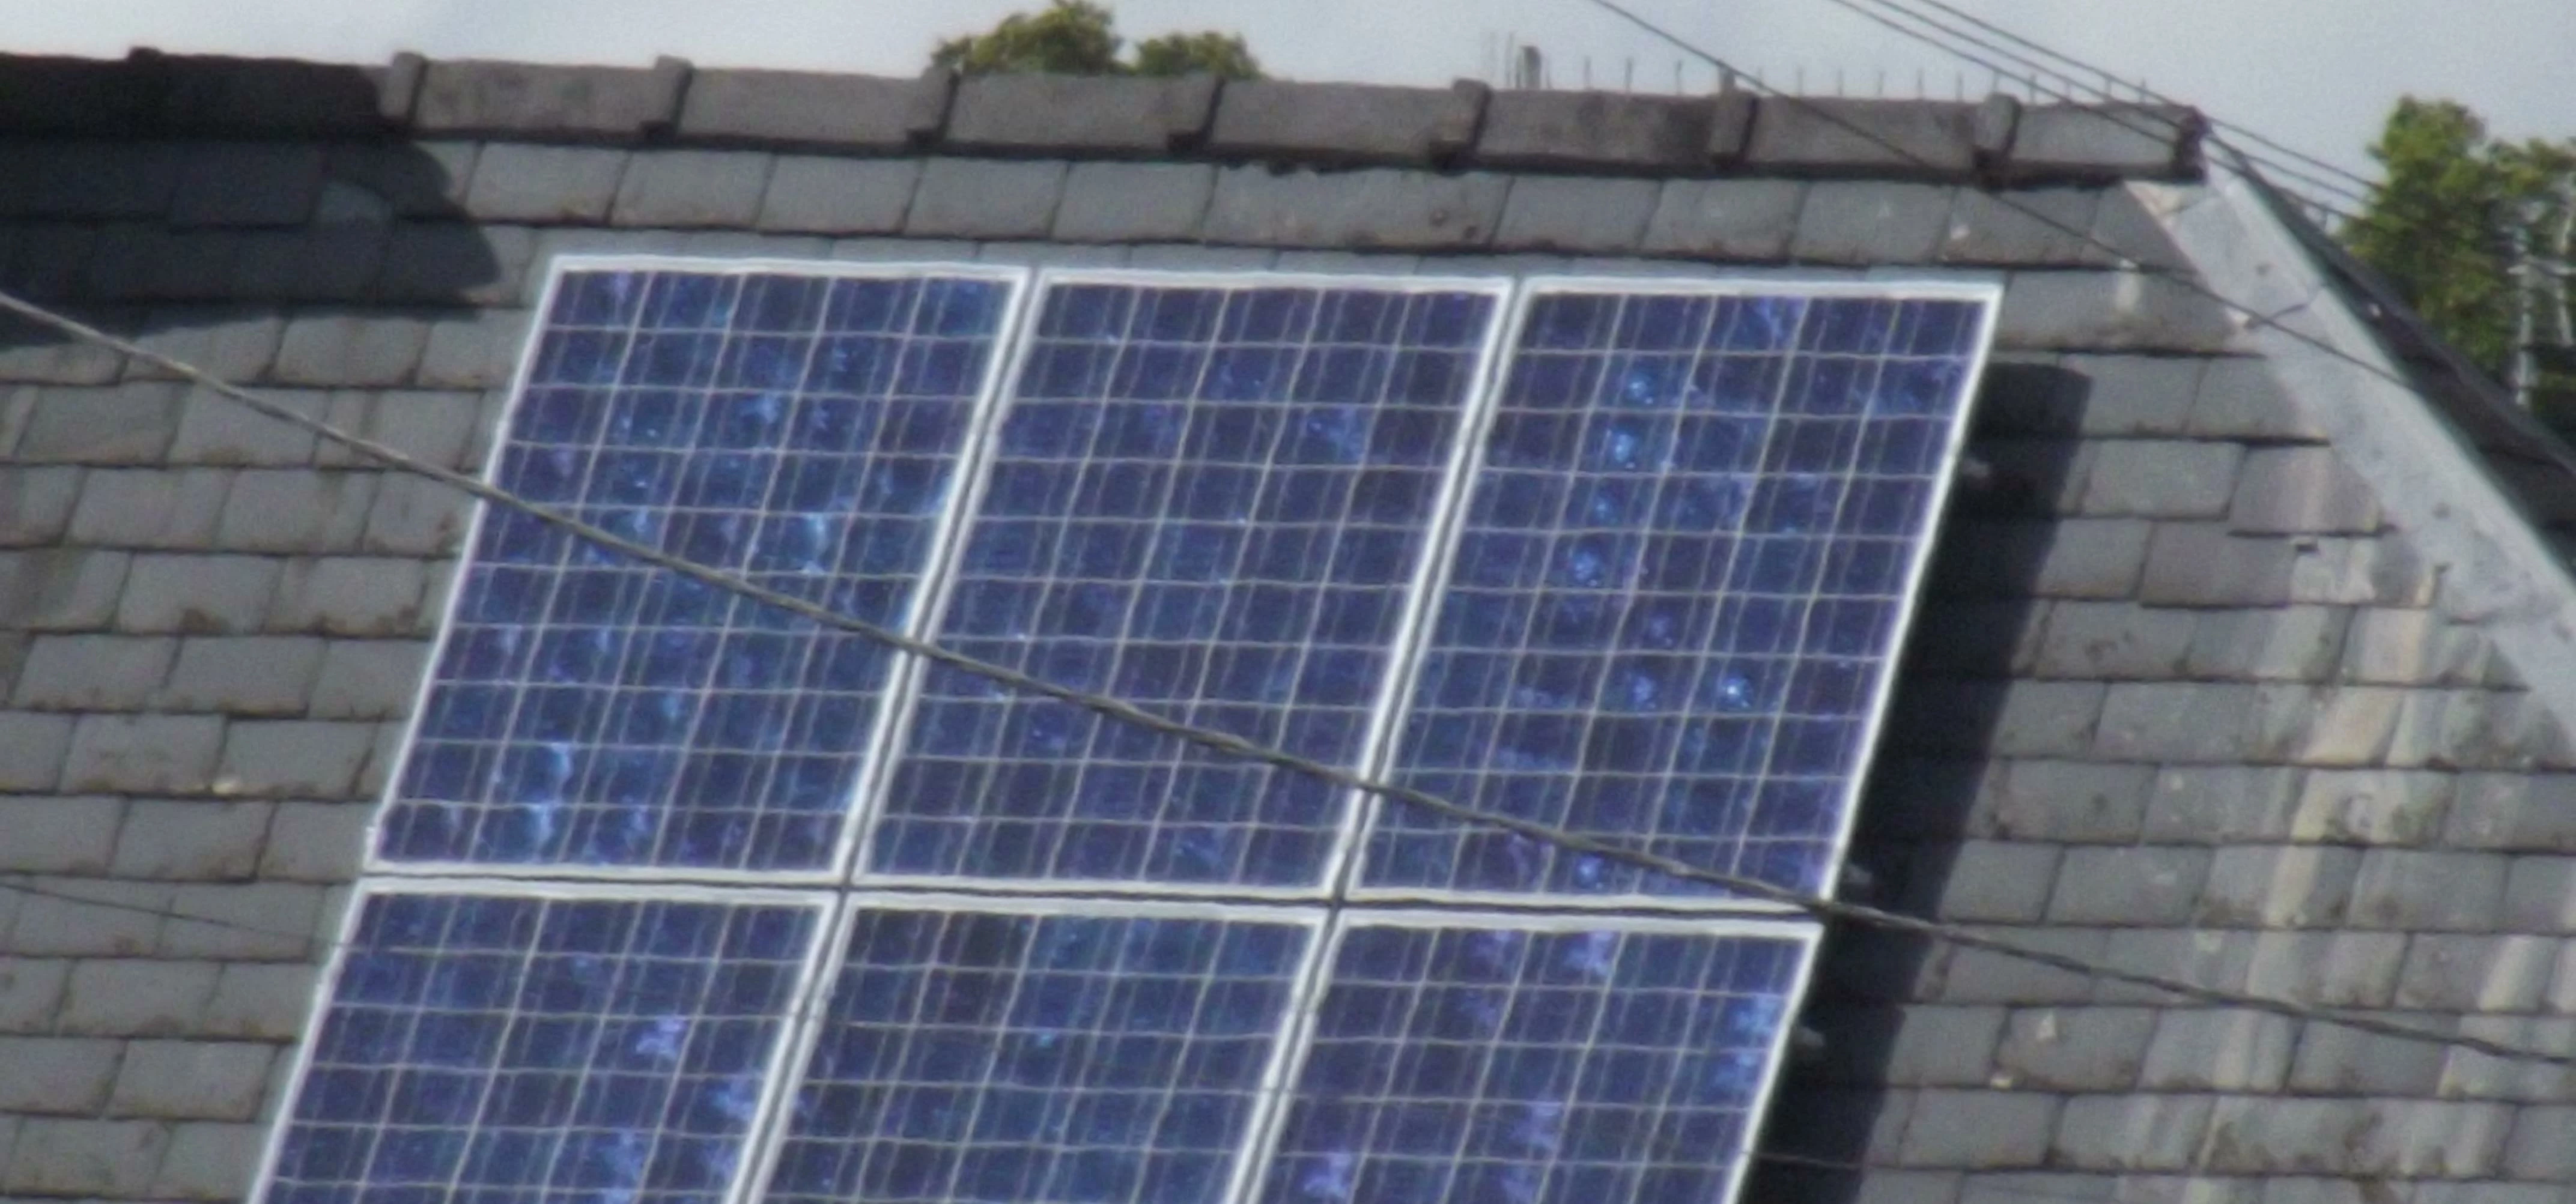 Solar panels - High Street, Bourton-on-the-Water